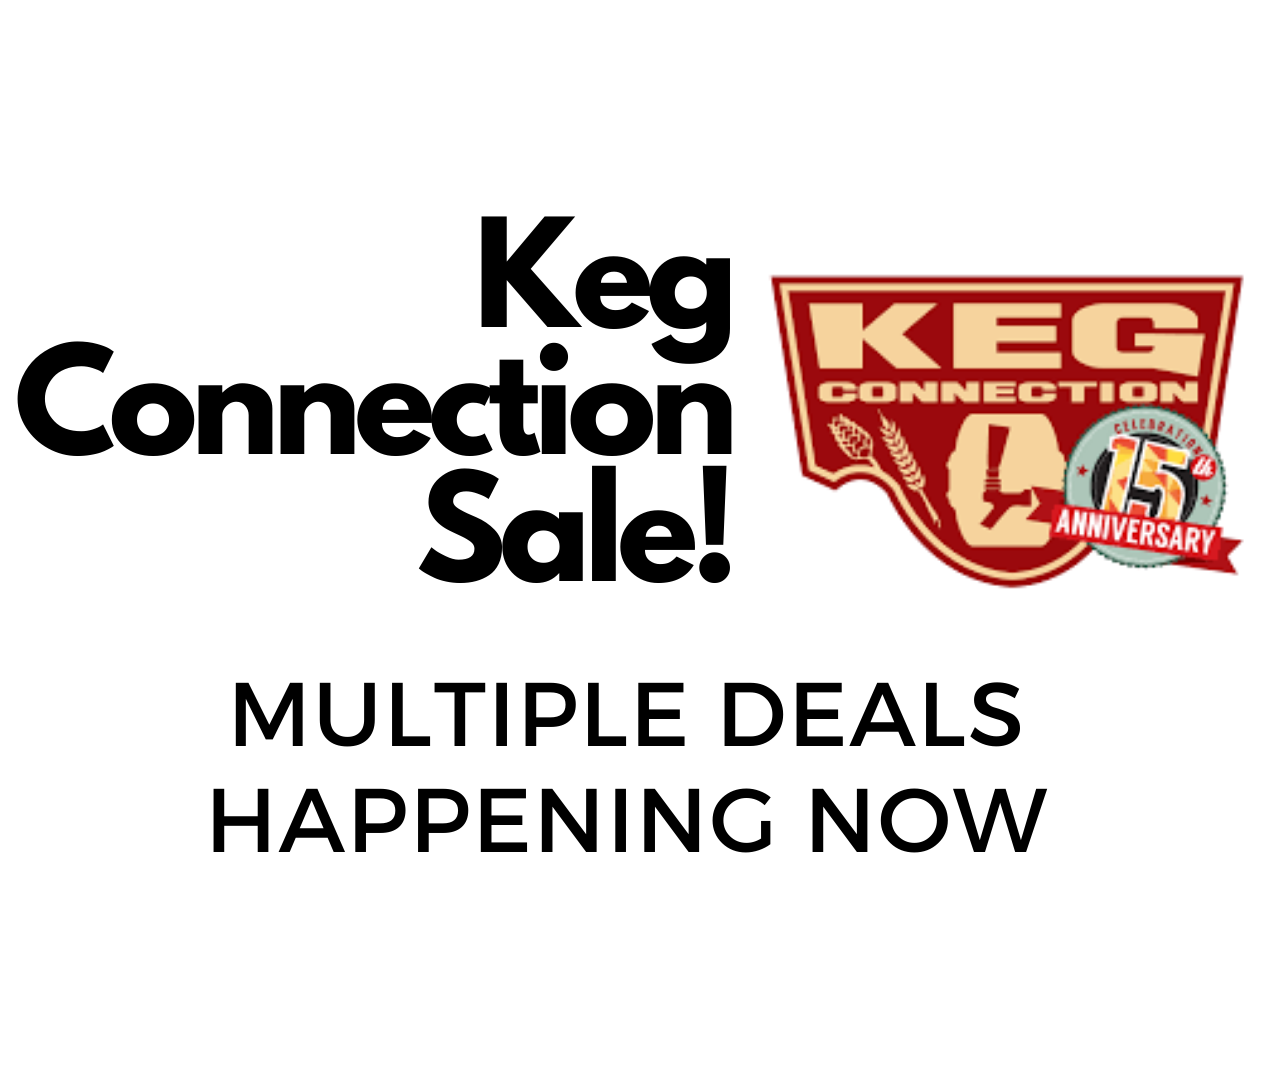 kegconnection.com sale